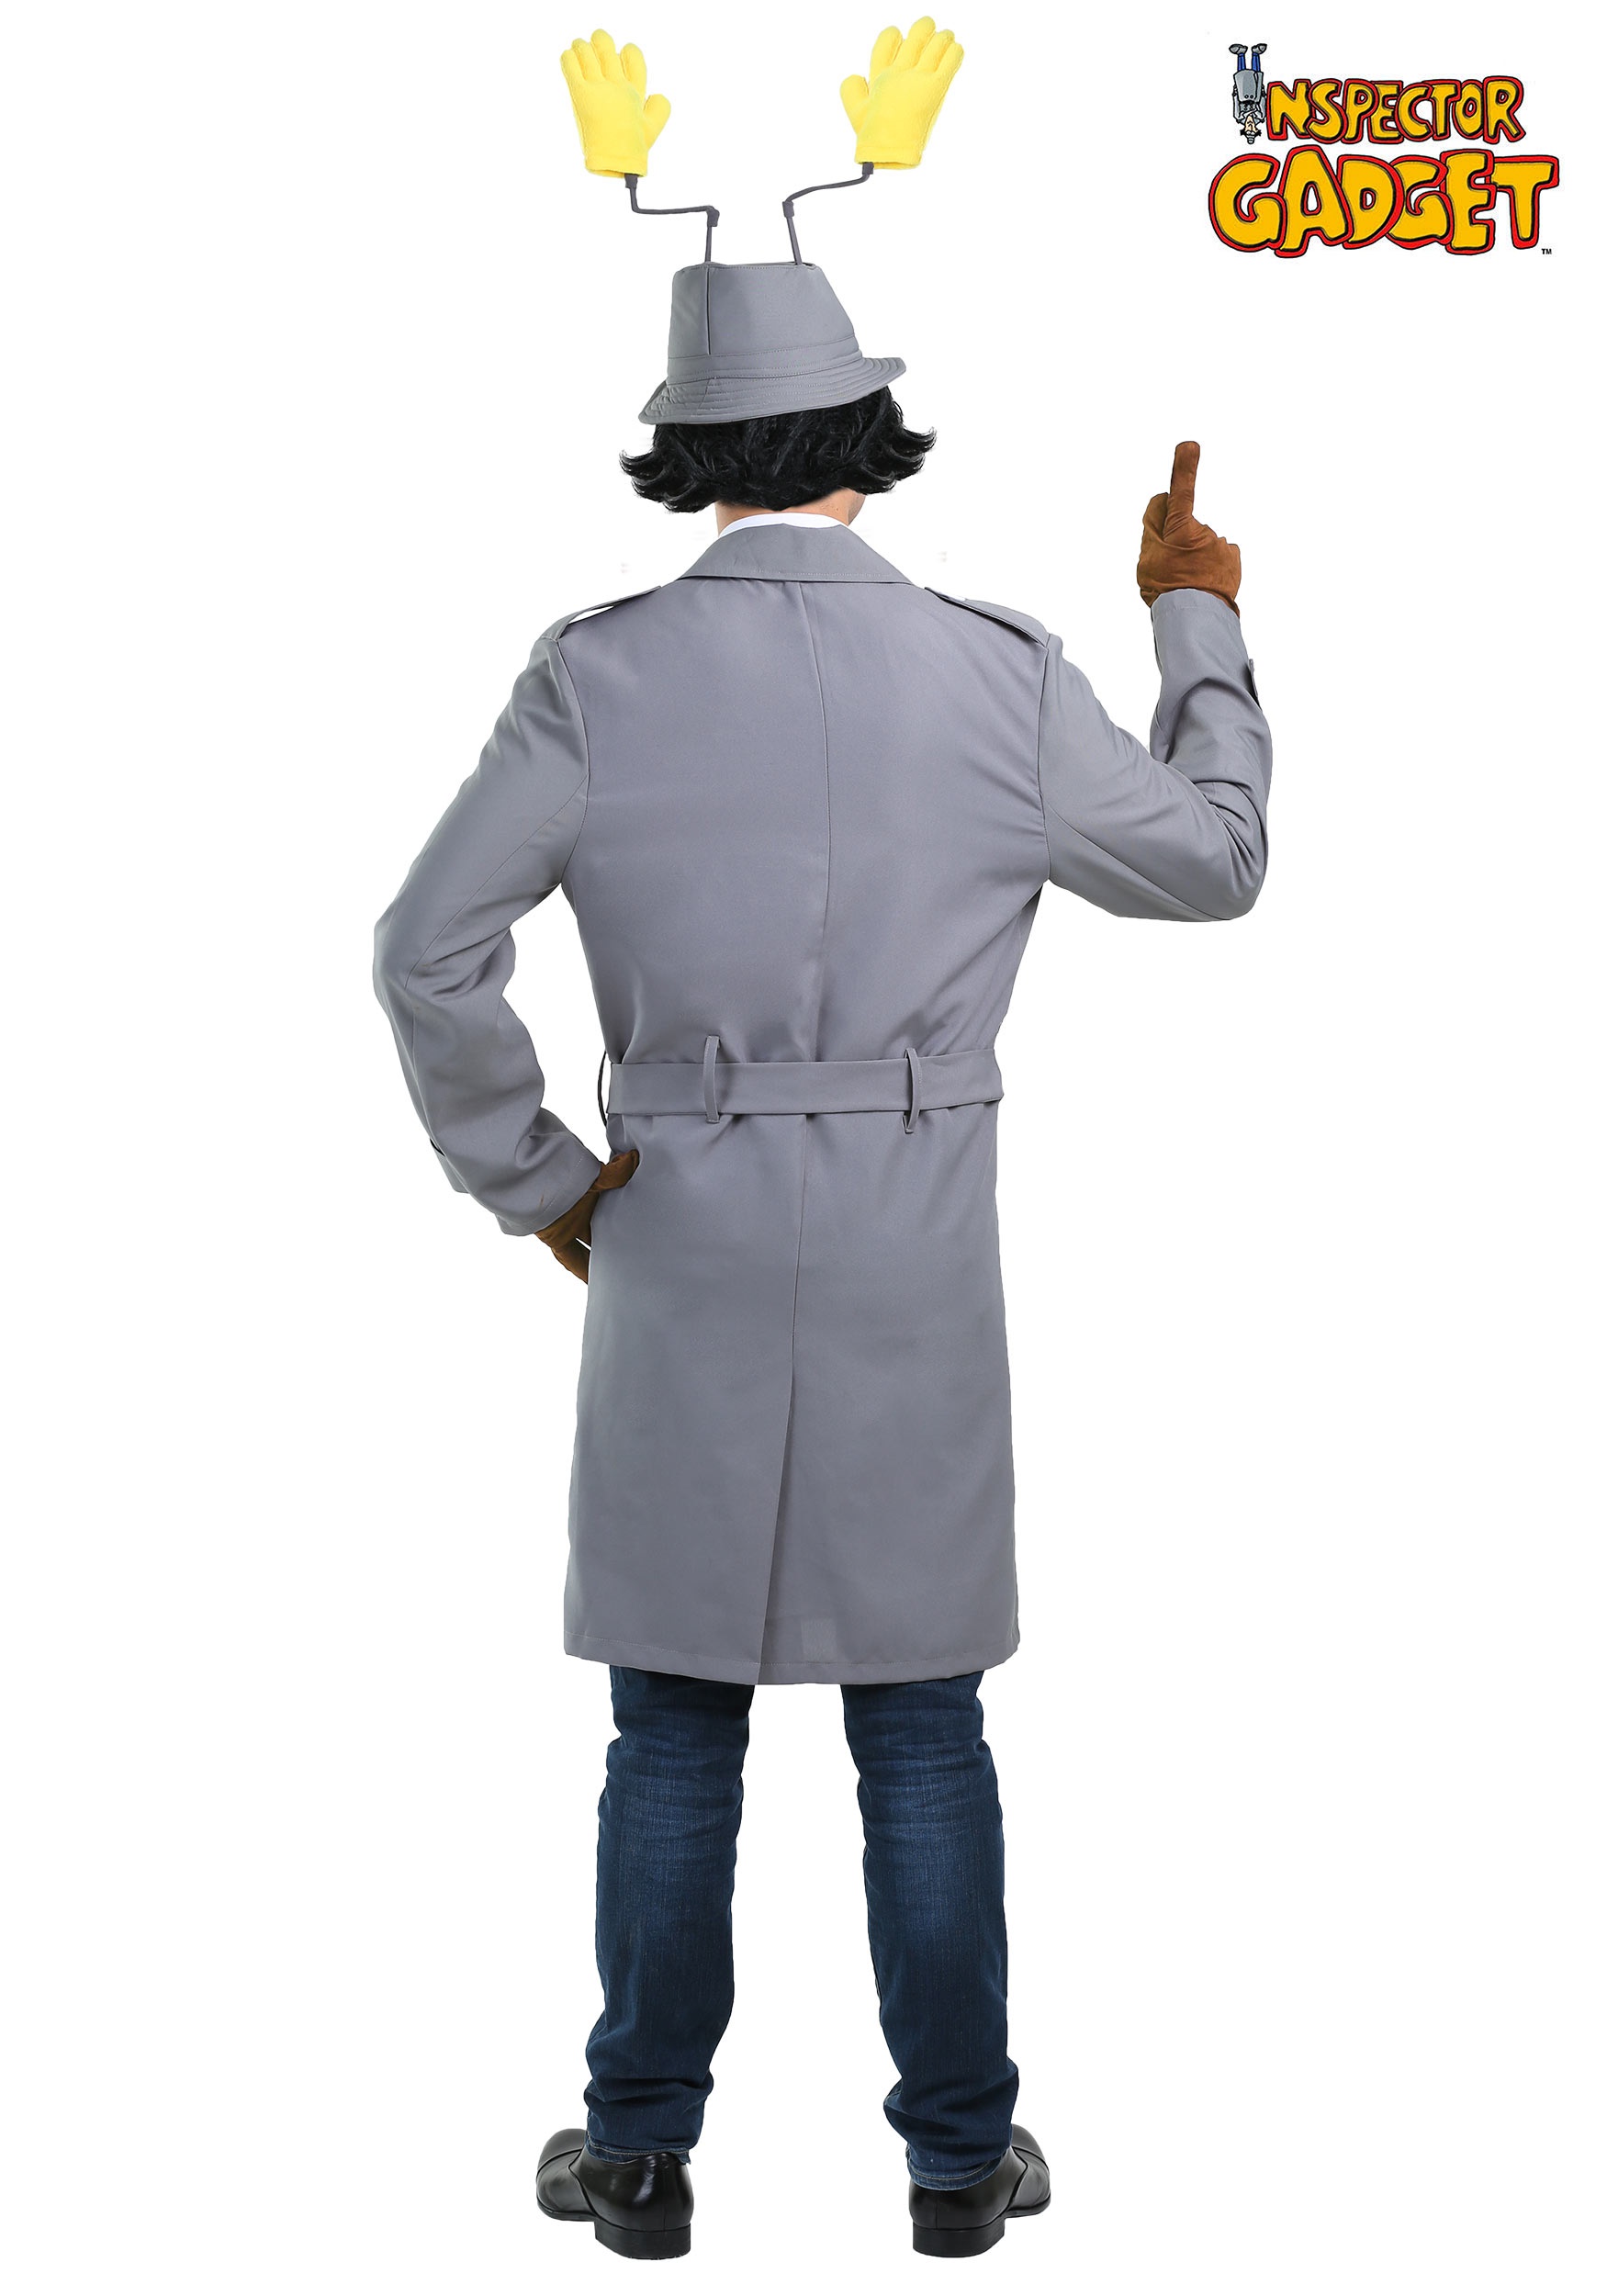 Plus Size Inspector Gadget Fancy Dress Costume For Men